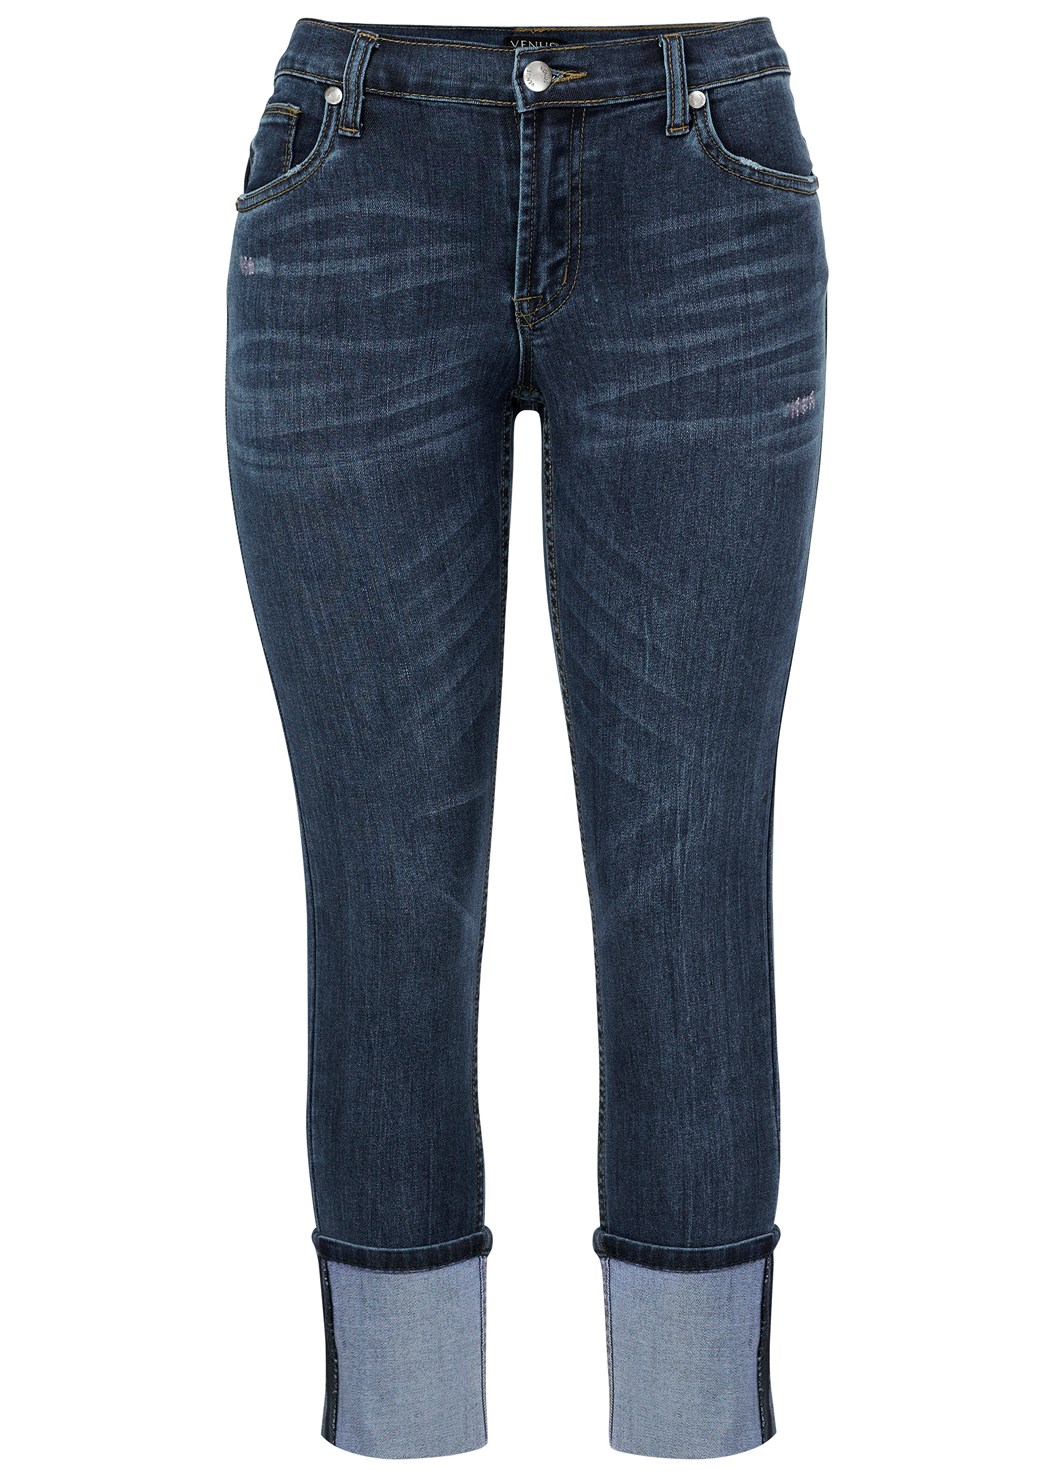 Plus Size Deep Cuff Jeans in Dark Wash | VENUS